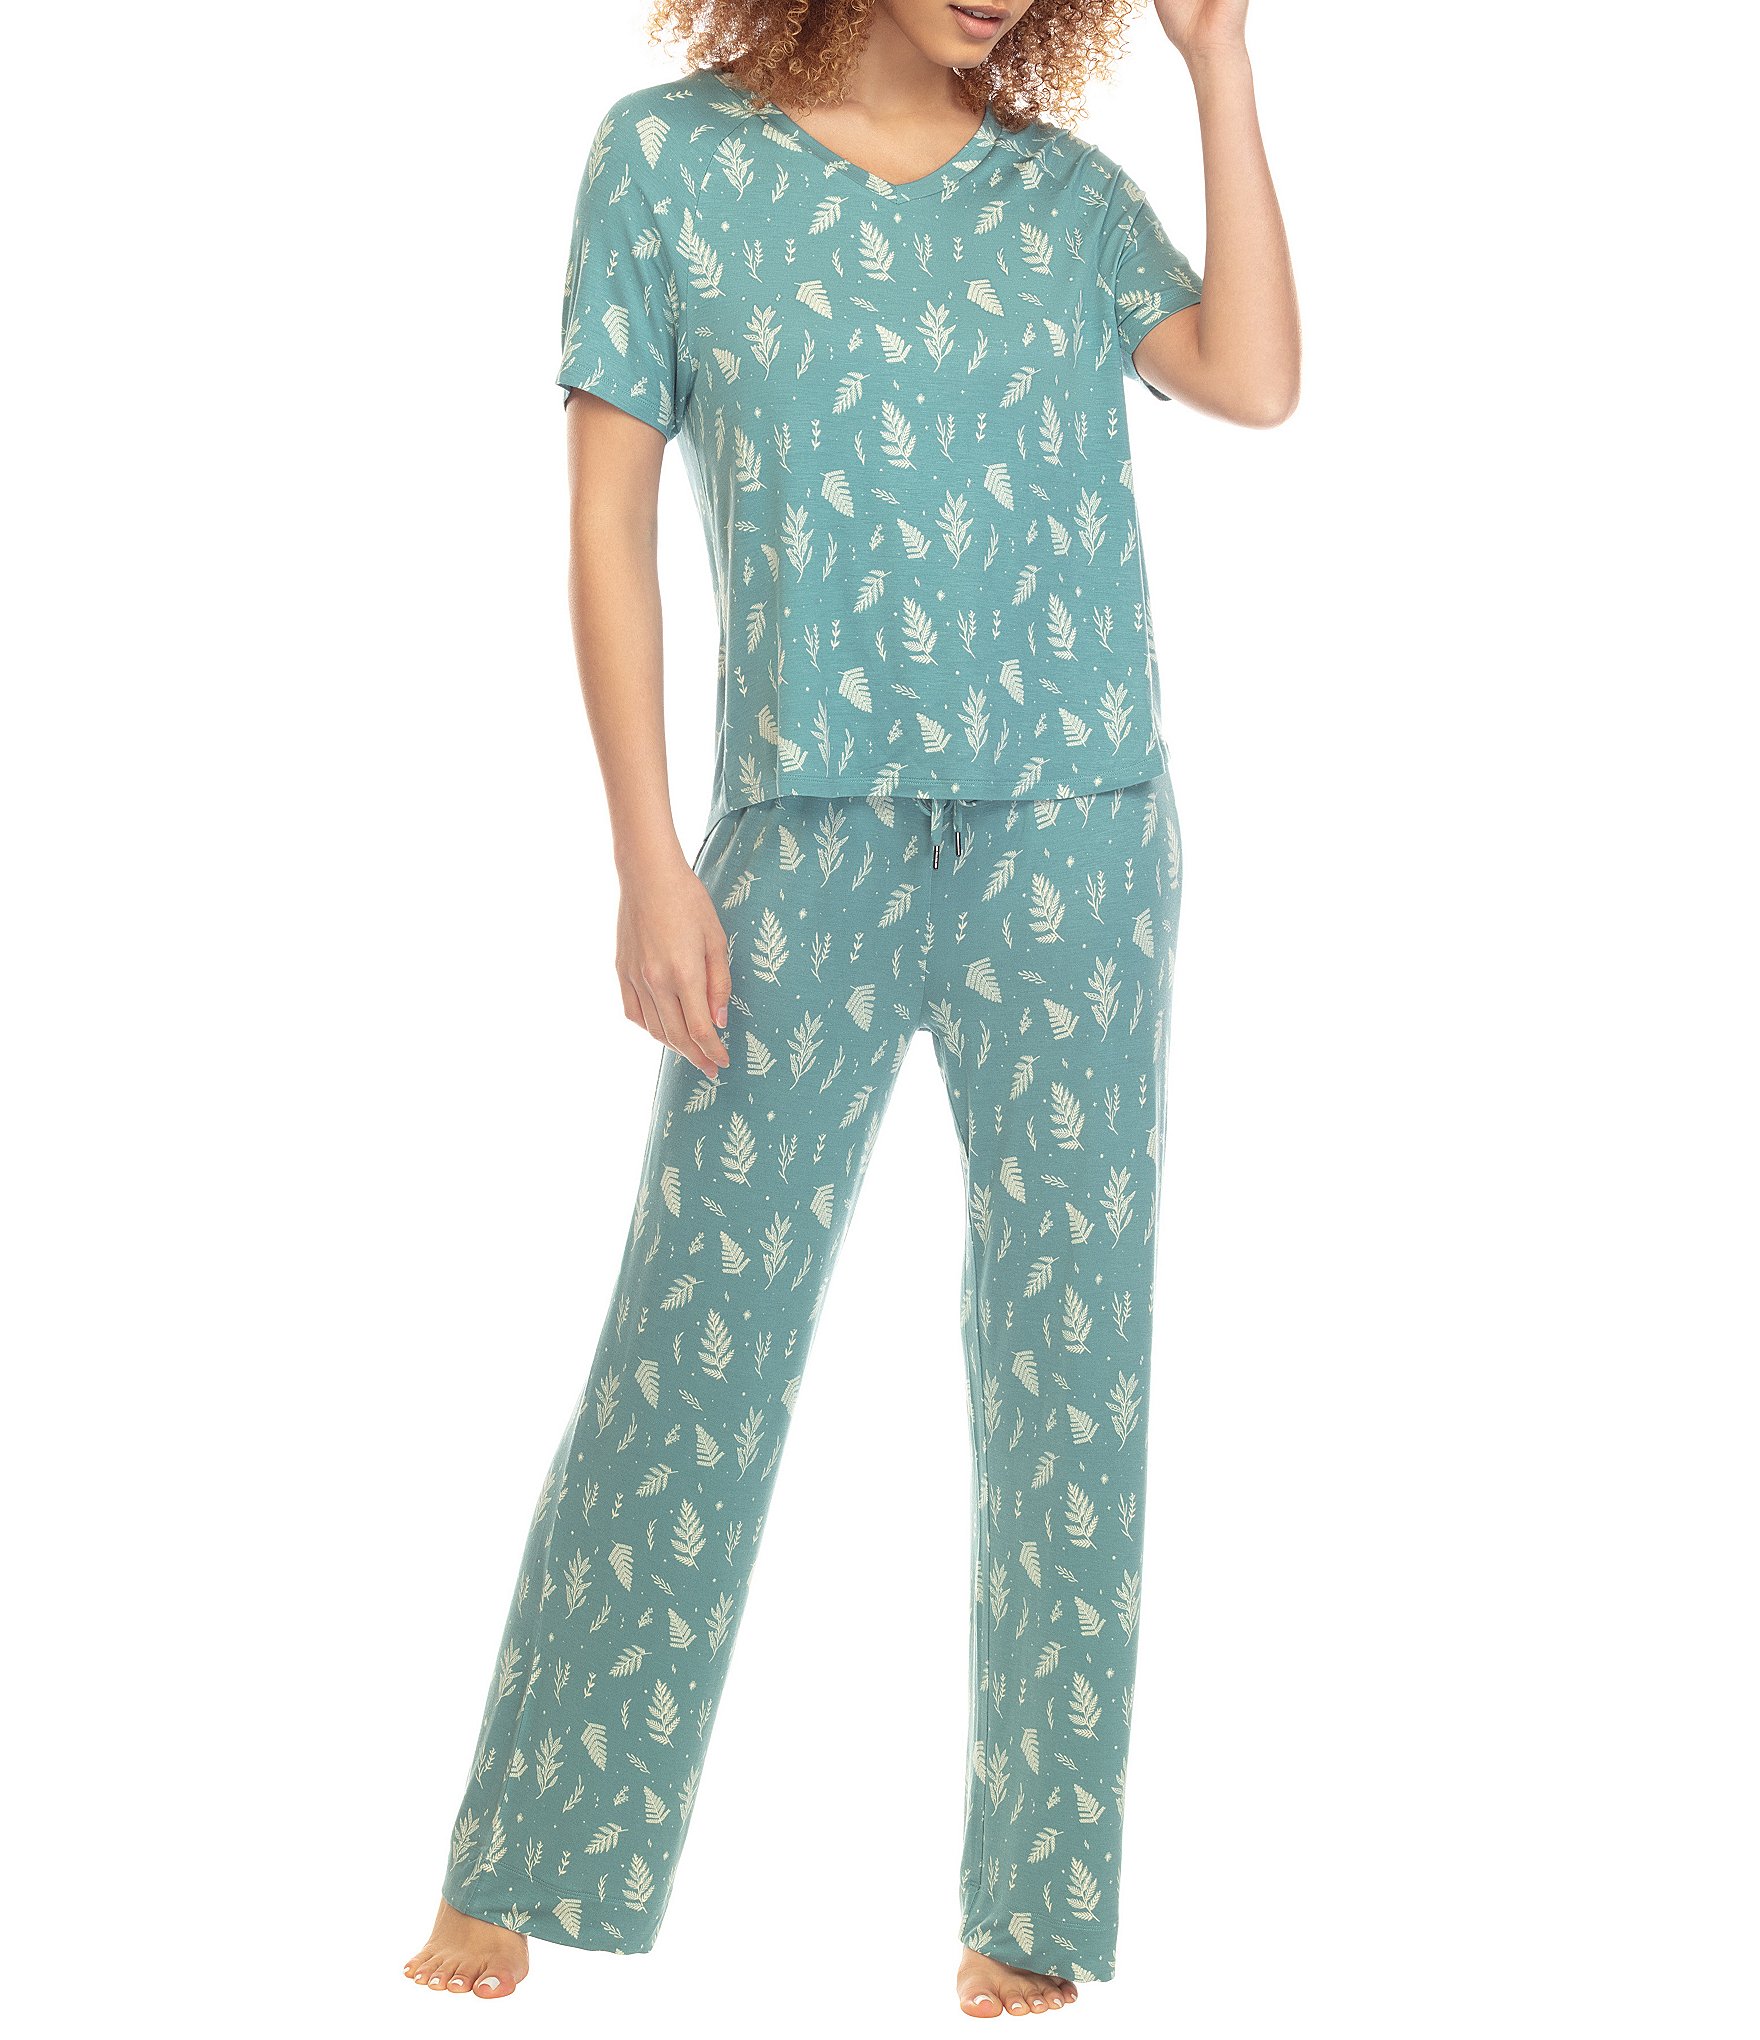 honeydew intimates all: Women's Pajamas & Sleepwear